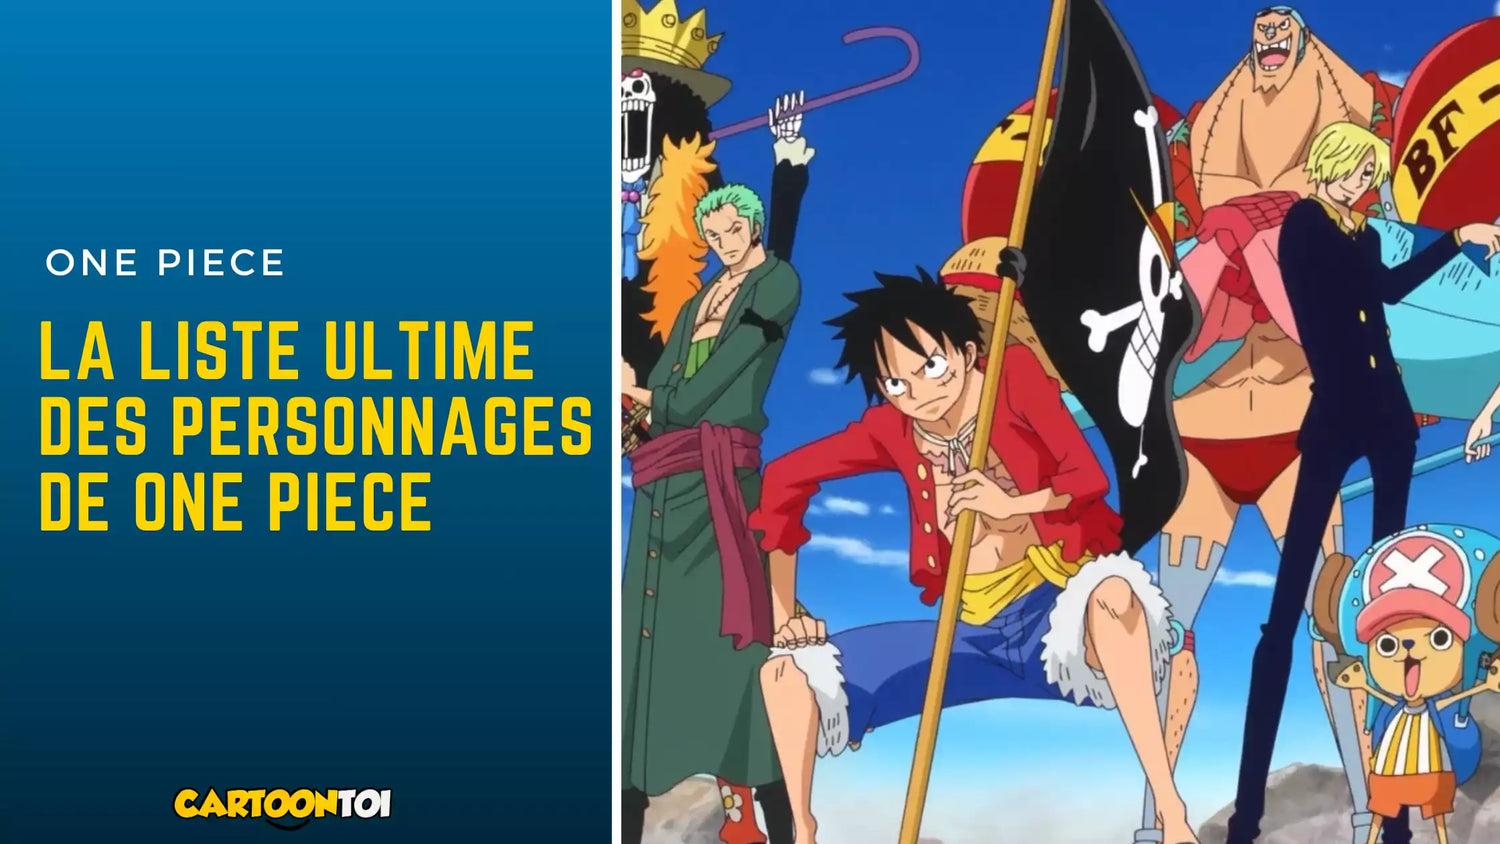 La lista de caracteres One Piece